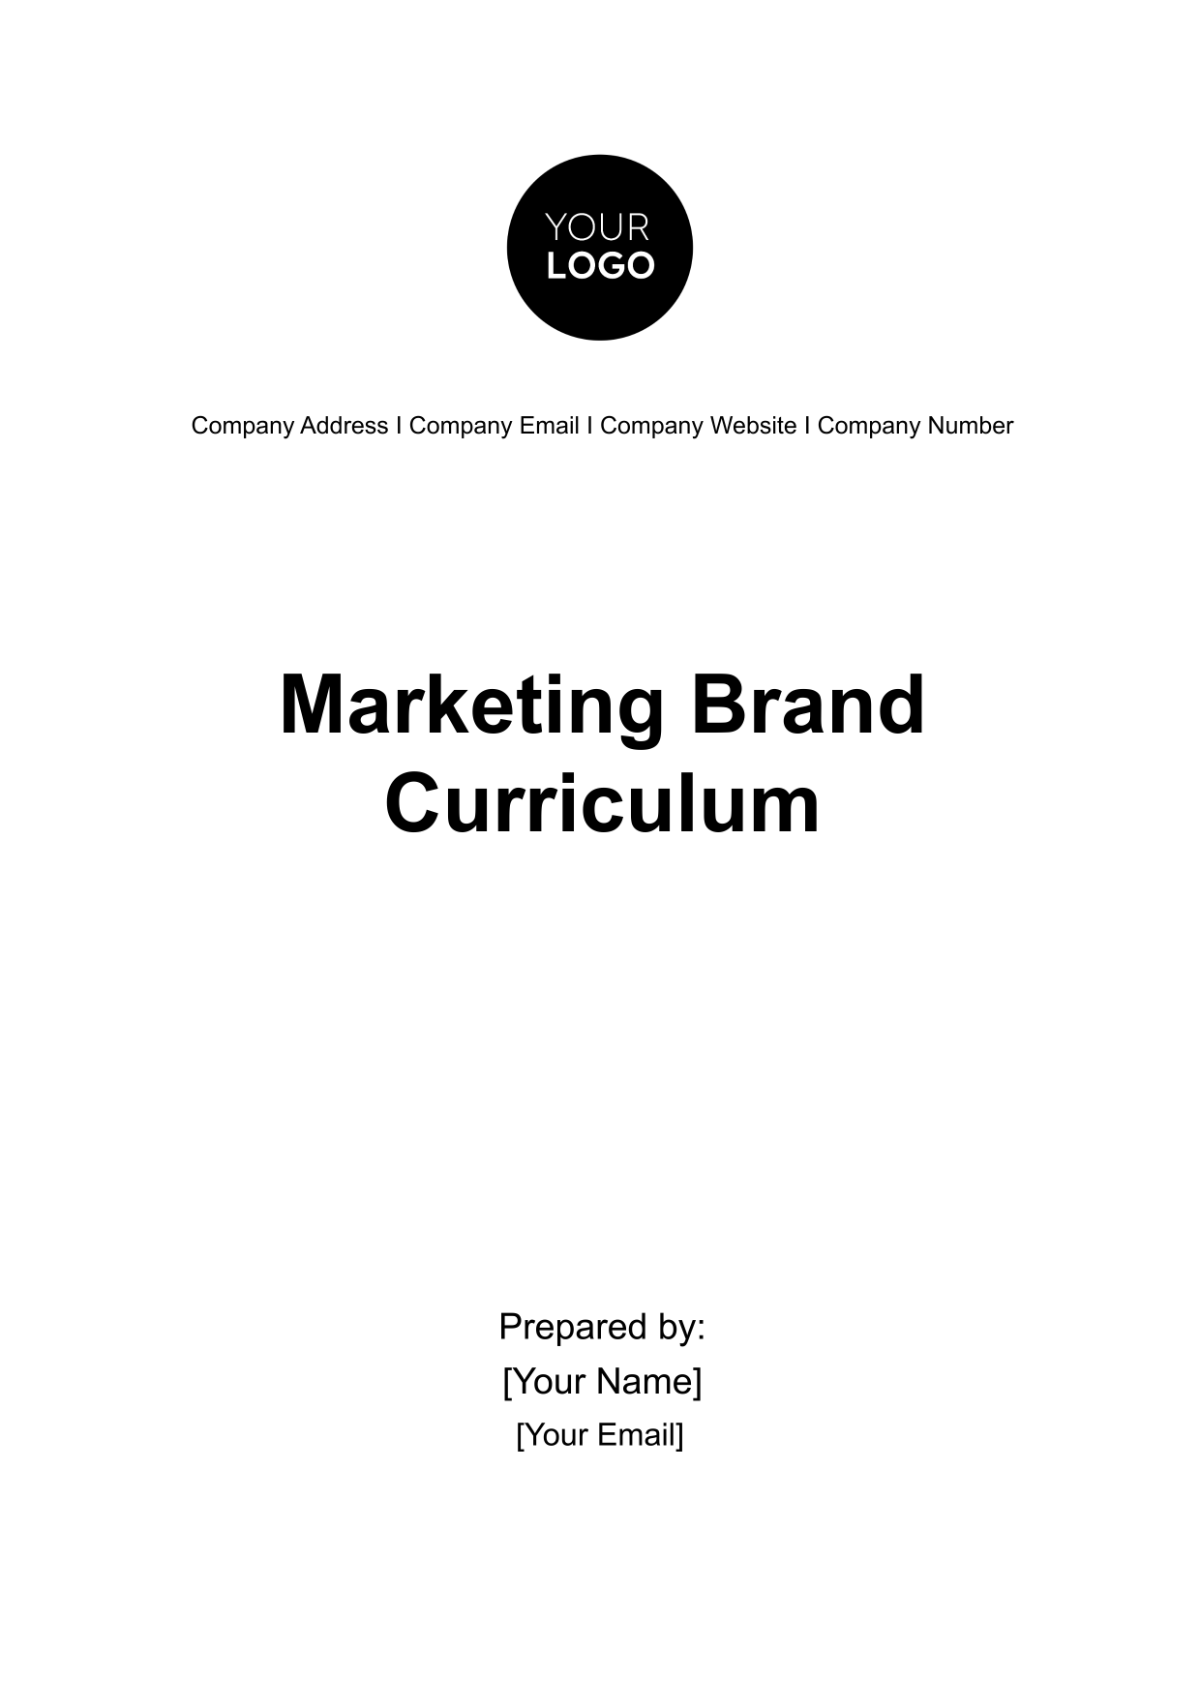 Marketing Brand Curriculum Template